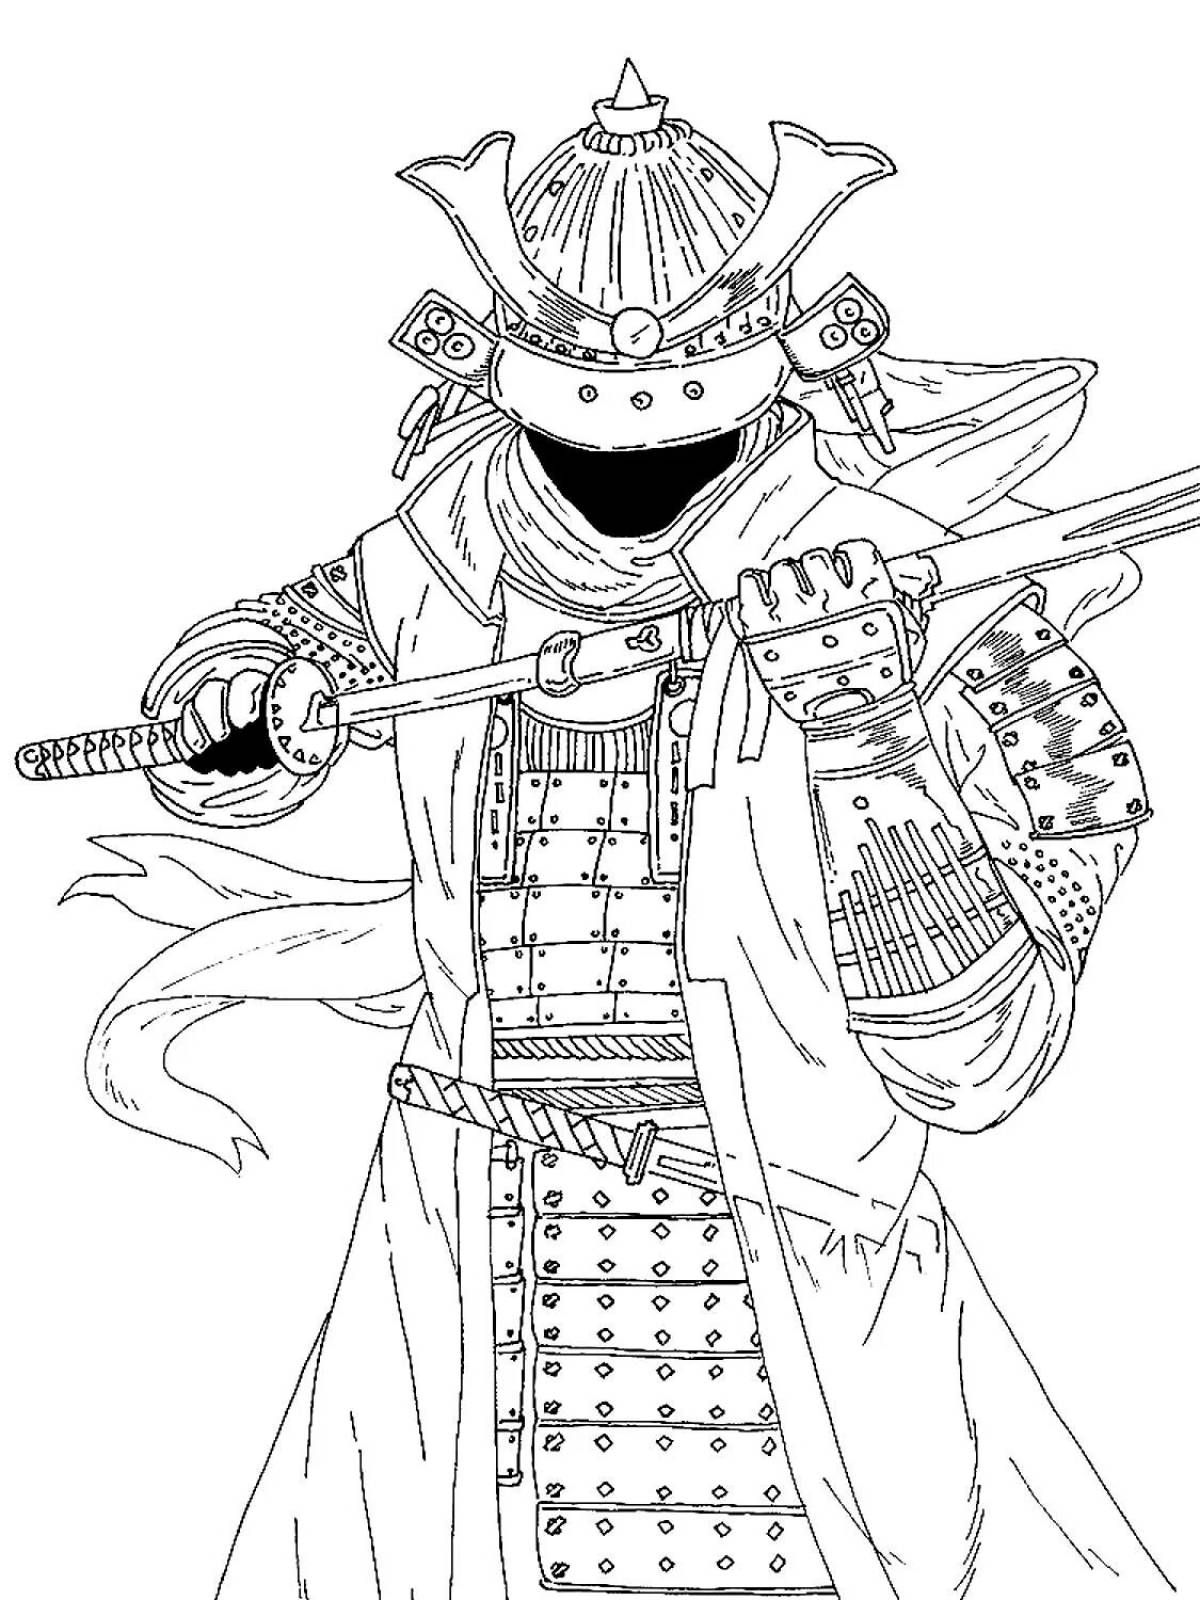 Great shogun coloring page